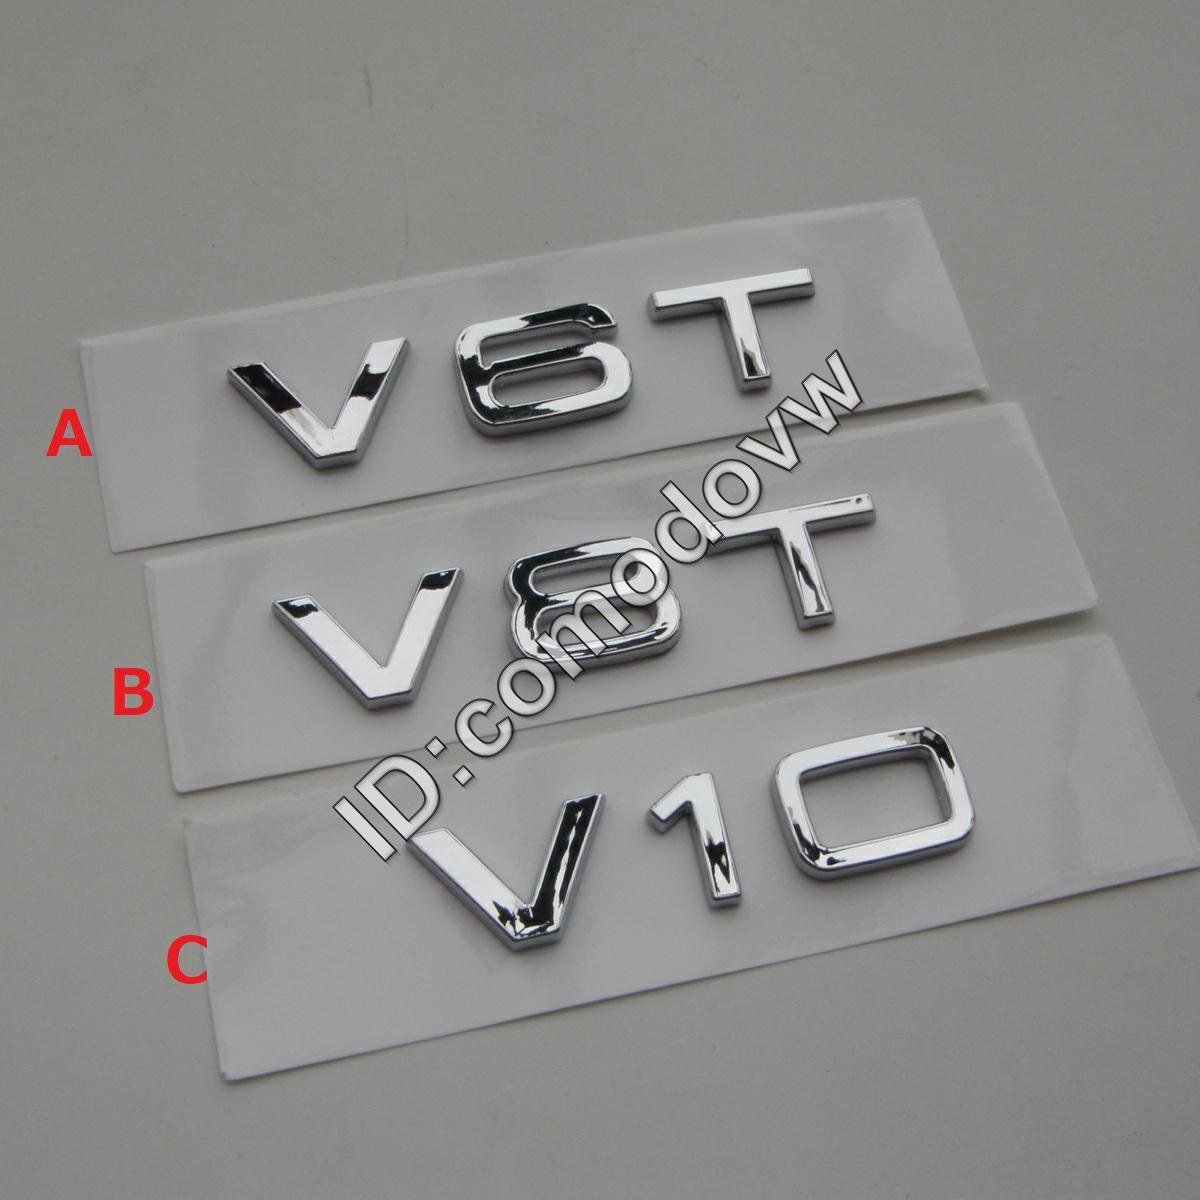 3D ABS プラスチック V6T V8T V10 レター エンブレム車 フェンダーサイドリアトランクバッジロゴステッカー アウディ TT RS7  SQ5 A8L(海外商品購入代行)｜売買されたオークション情報、yahooの商品情報をアーカイブ公開 - オークファン（aucfan.com）